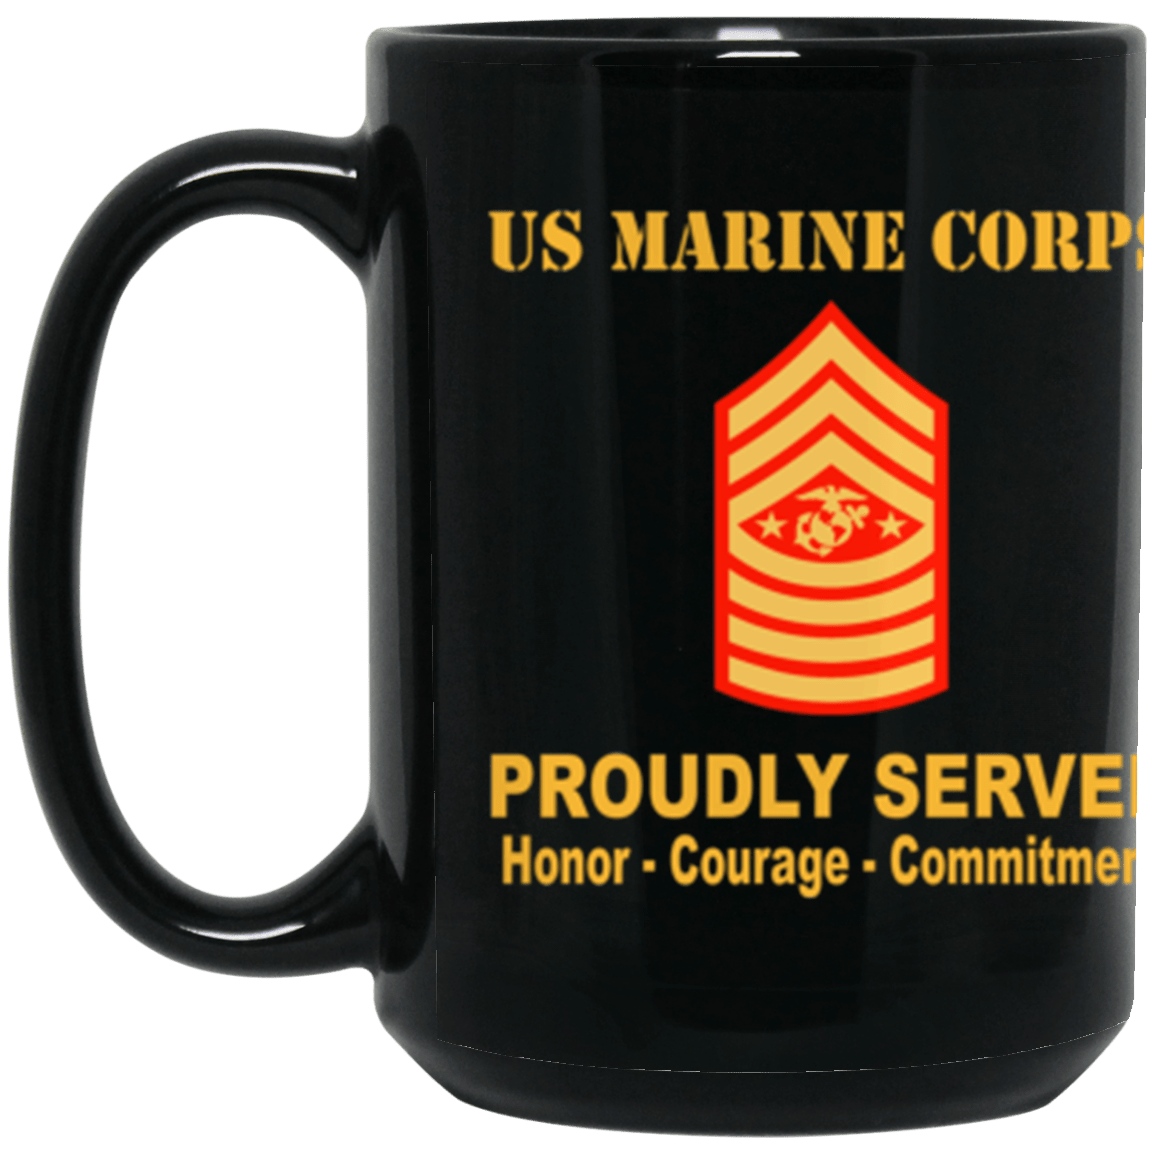 USMC E-9 sgtMa E9 Sergeant Major Of The Marine Corps Enlisted Advisor Ranks Proudly Served Core Values 15 oz. Black Mug